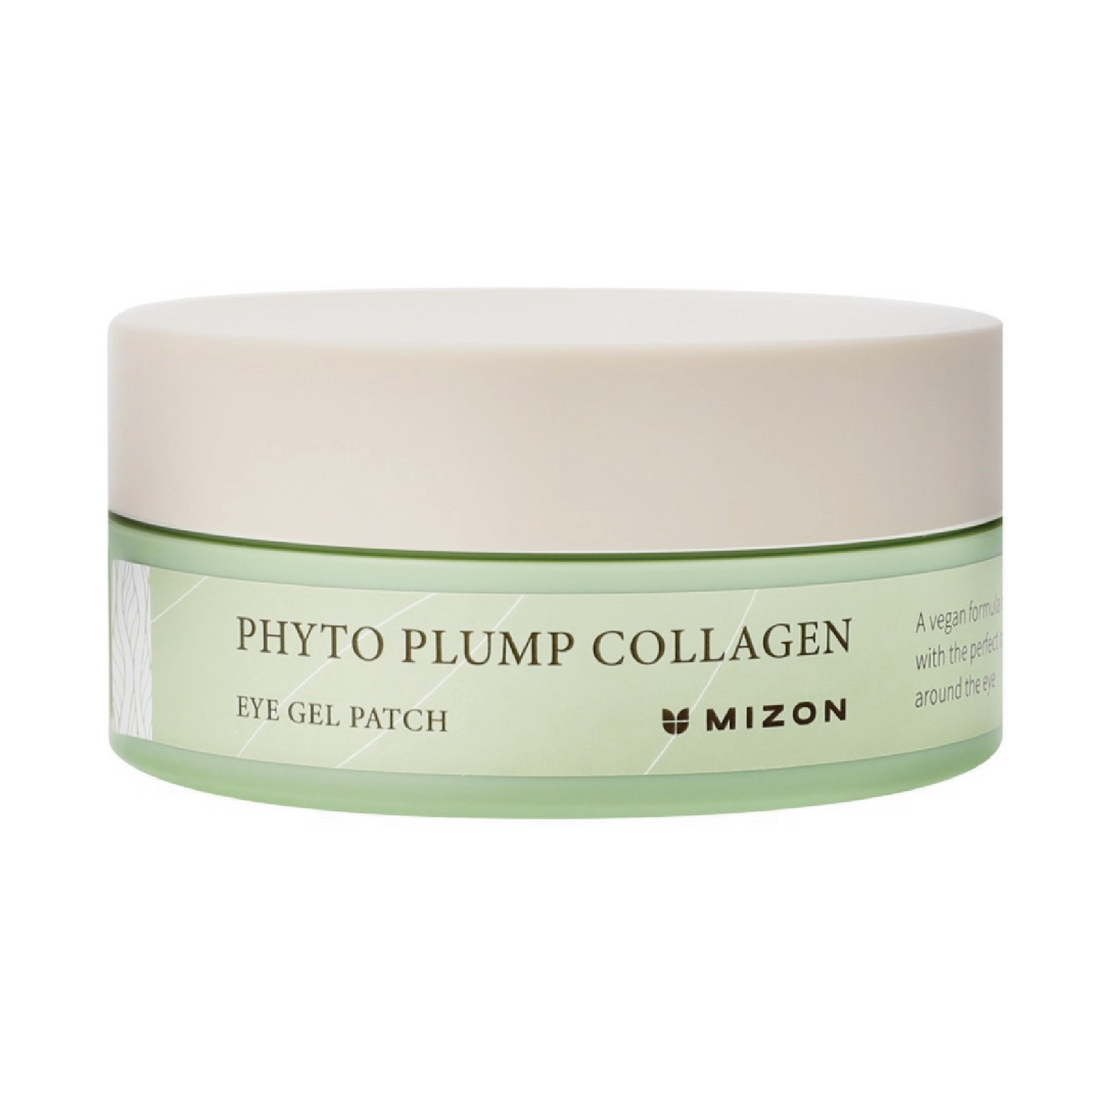 Mizon | Phyto plump collagen eye gel patch